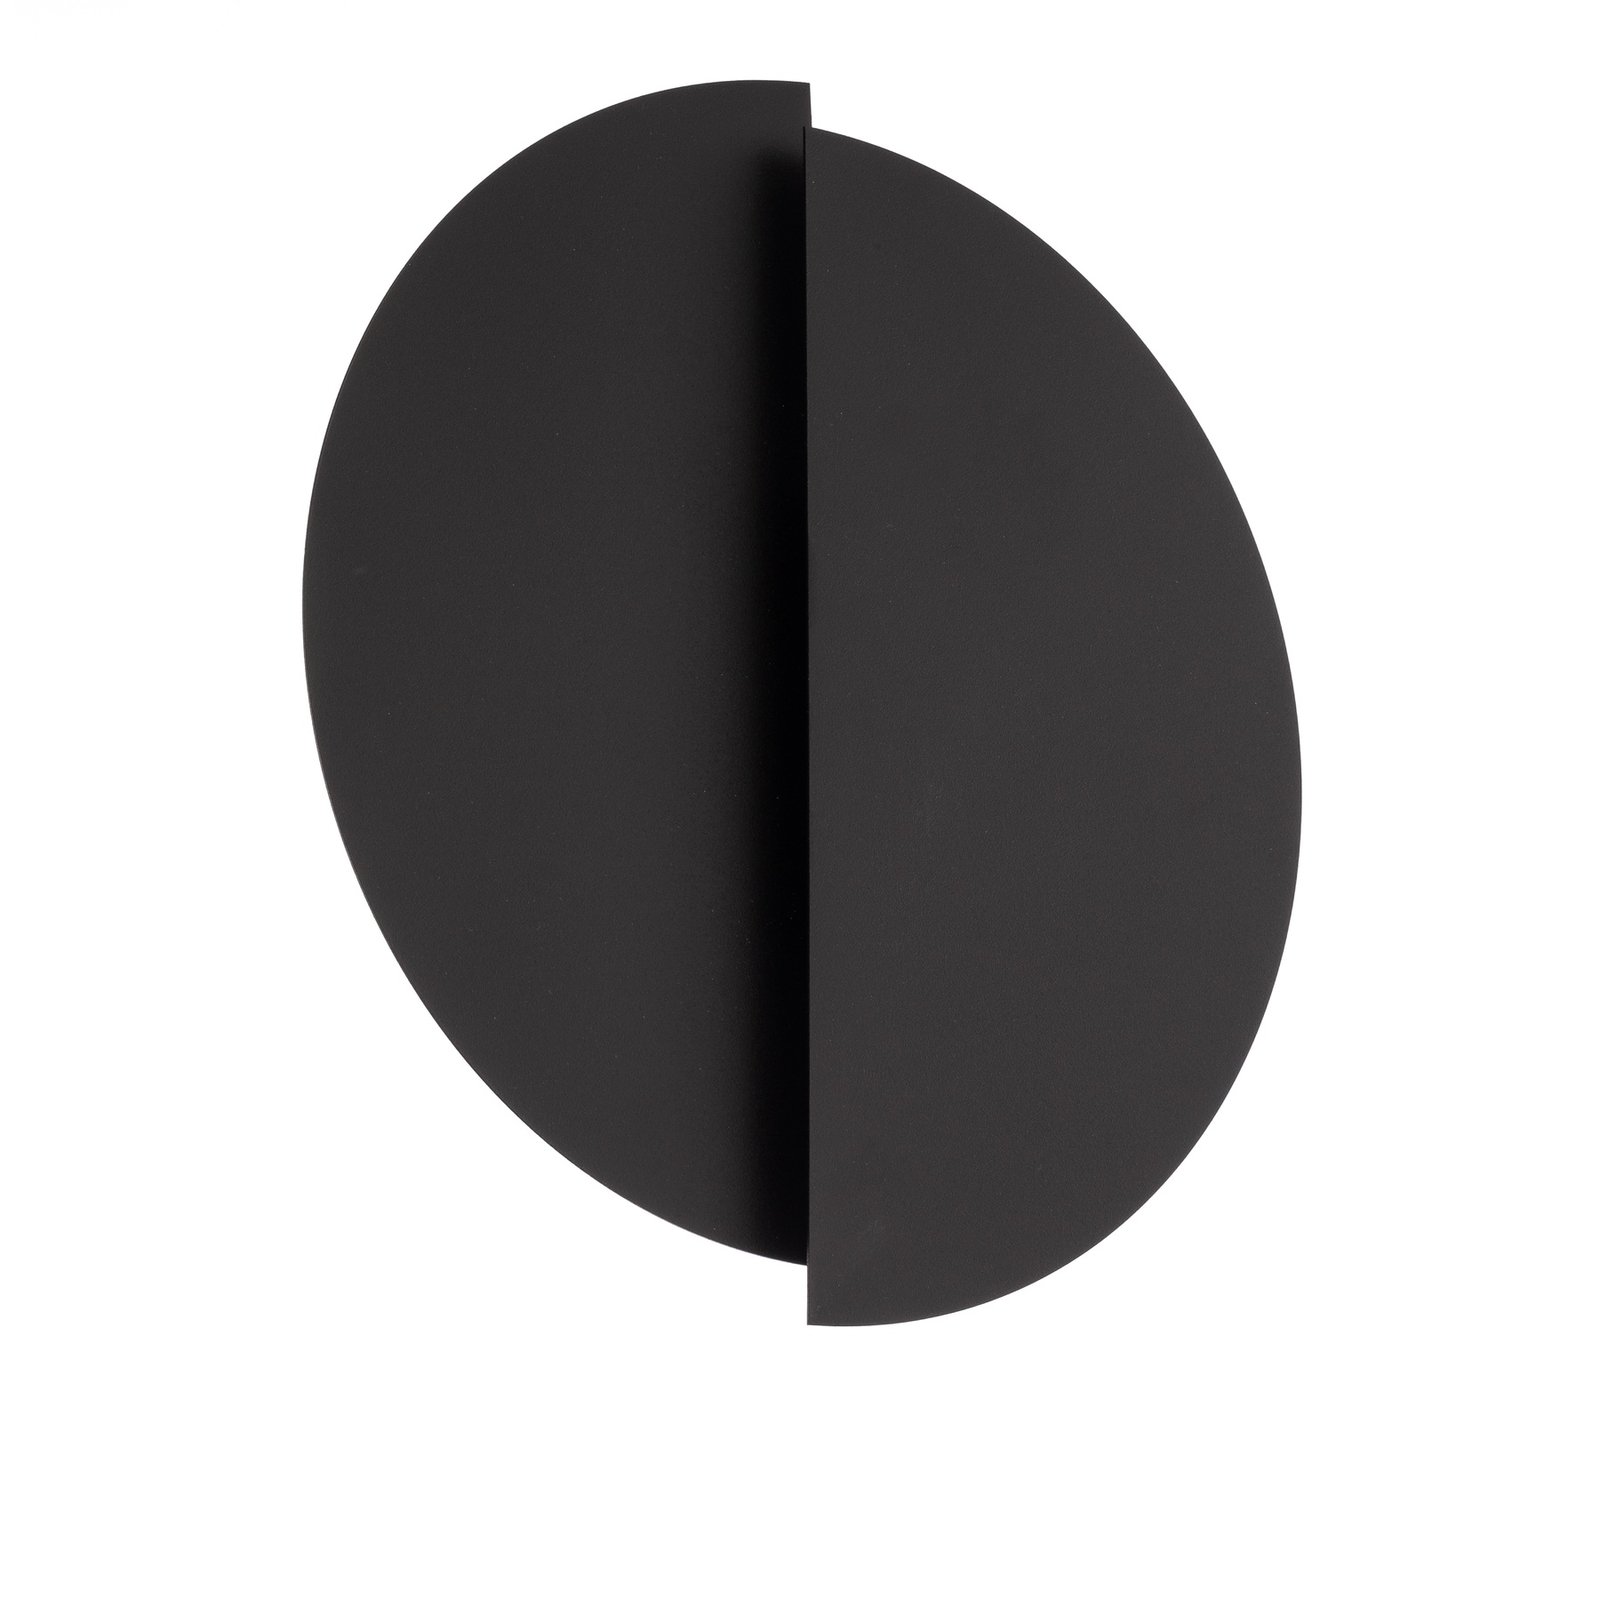 Vägglampa Form 9, 28 cm x 32 cm, svart